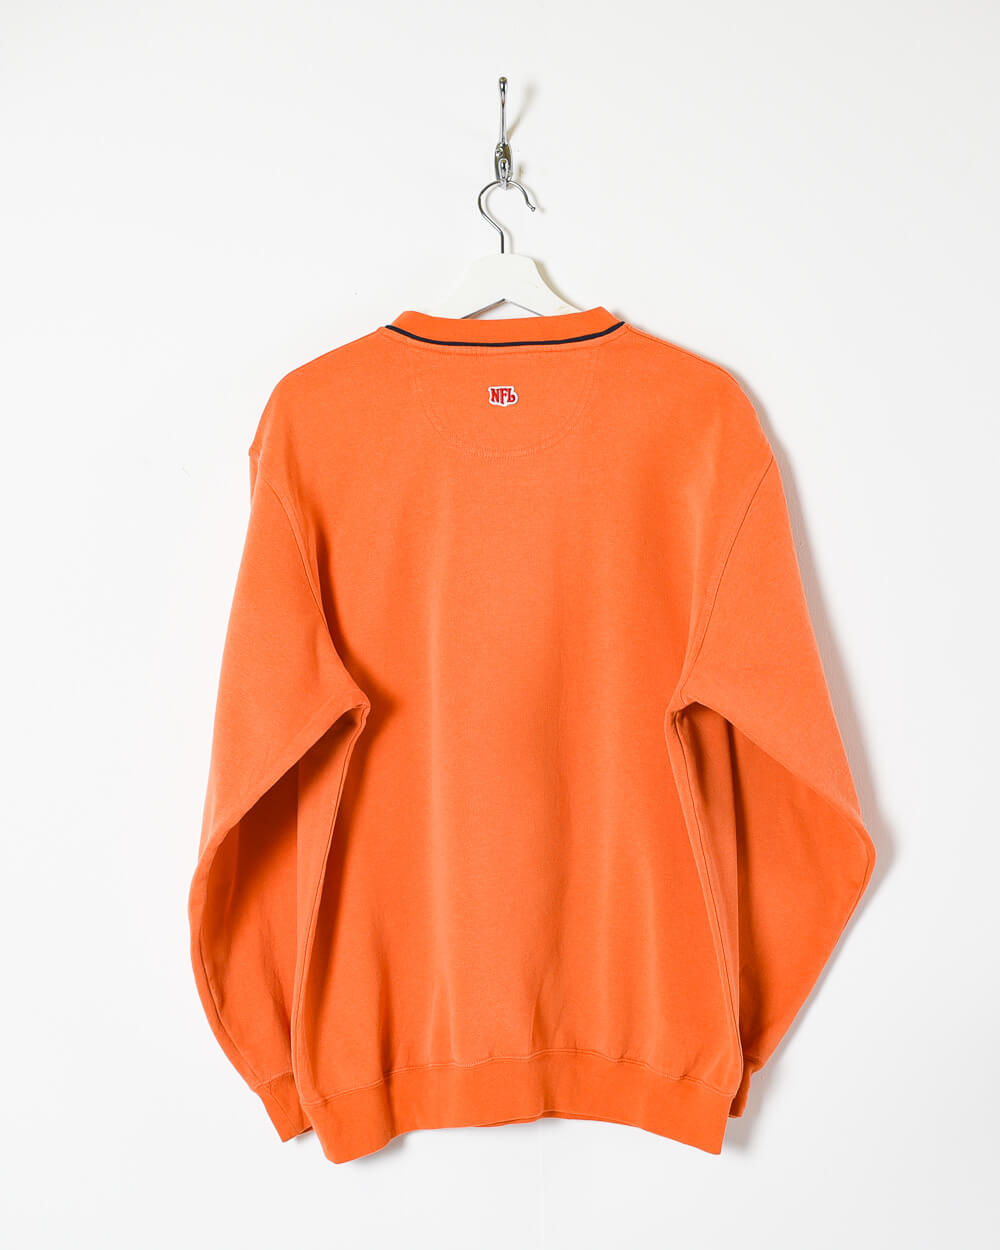 Orange Bears Chicago Sweatshirt - Large